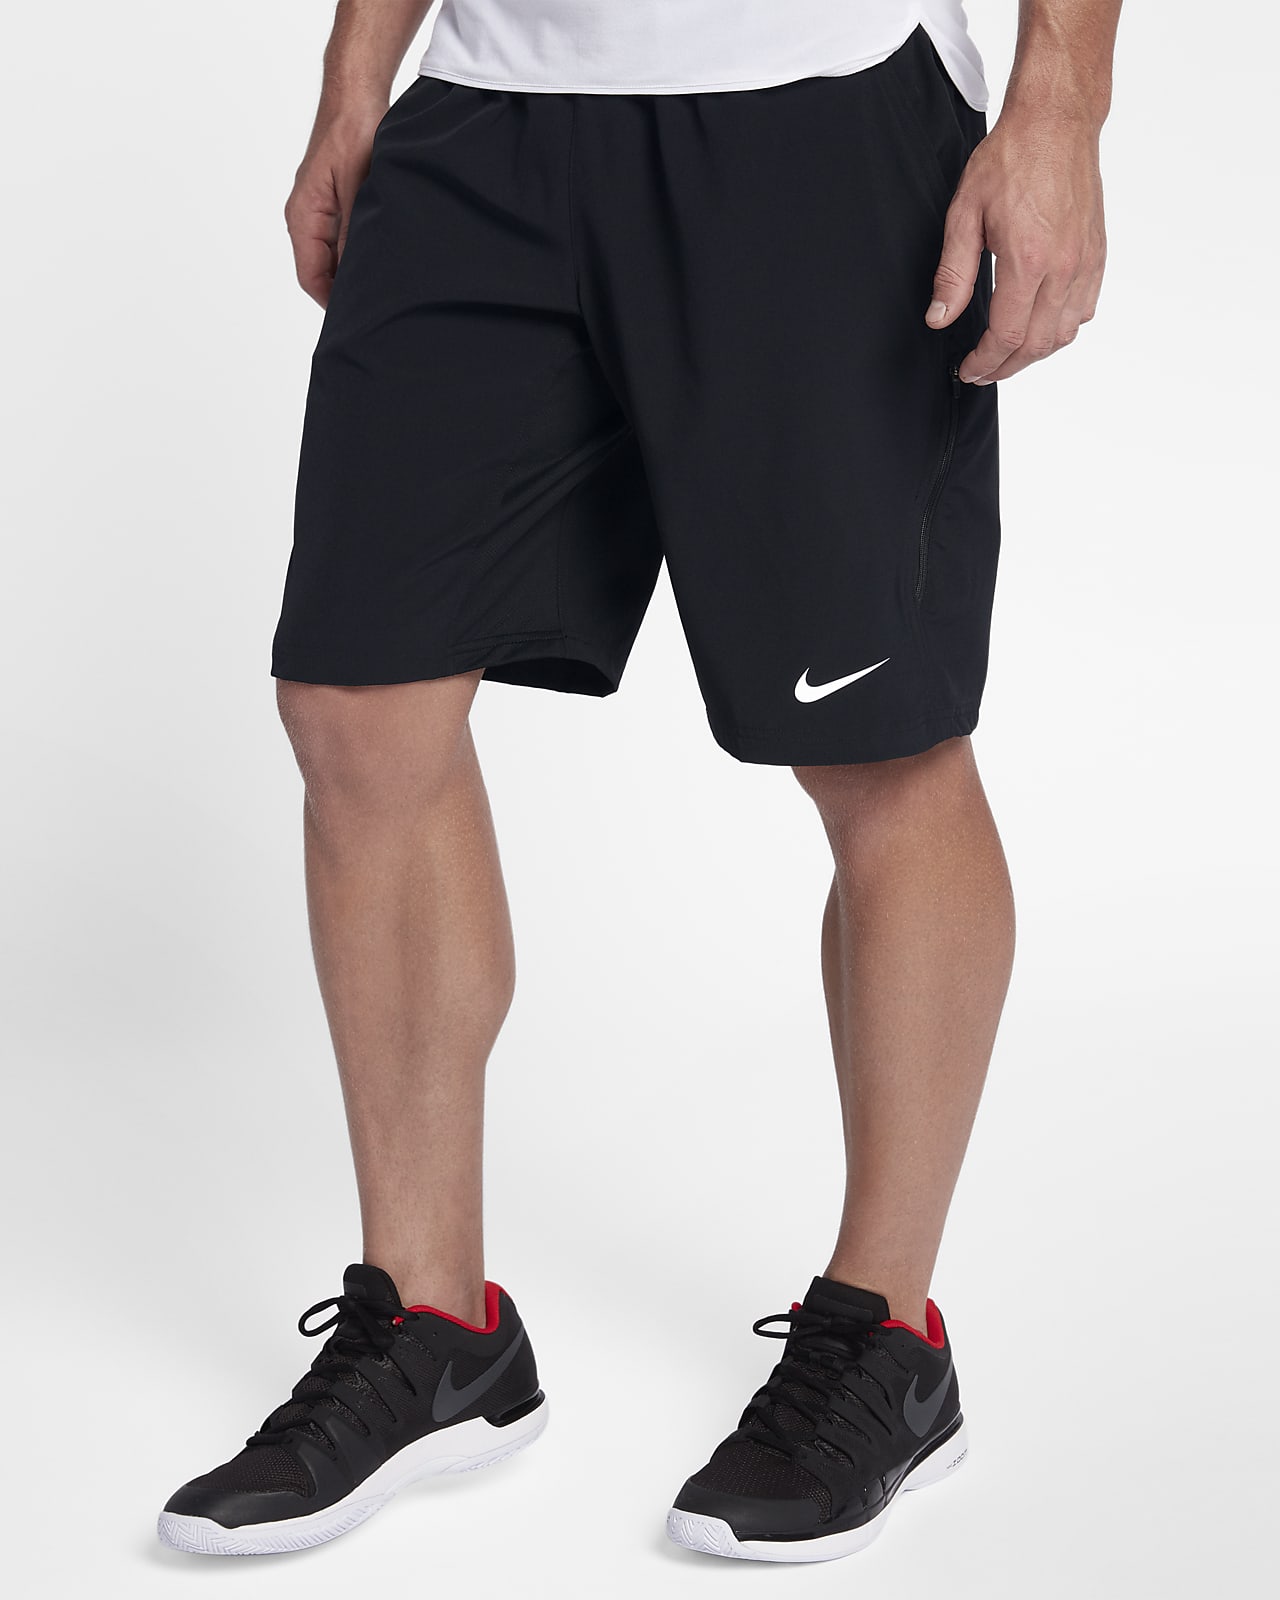 NikeCourt Flex Men's 11" Tennis Shorts